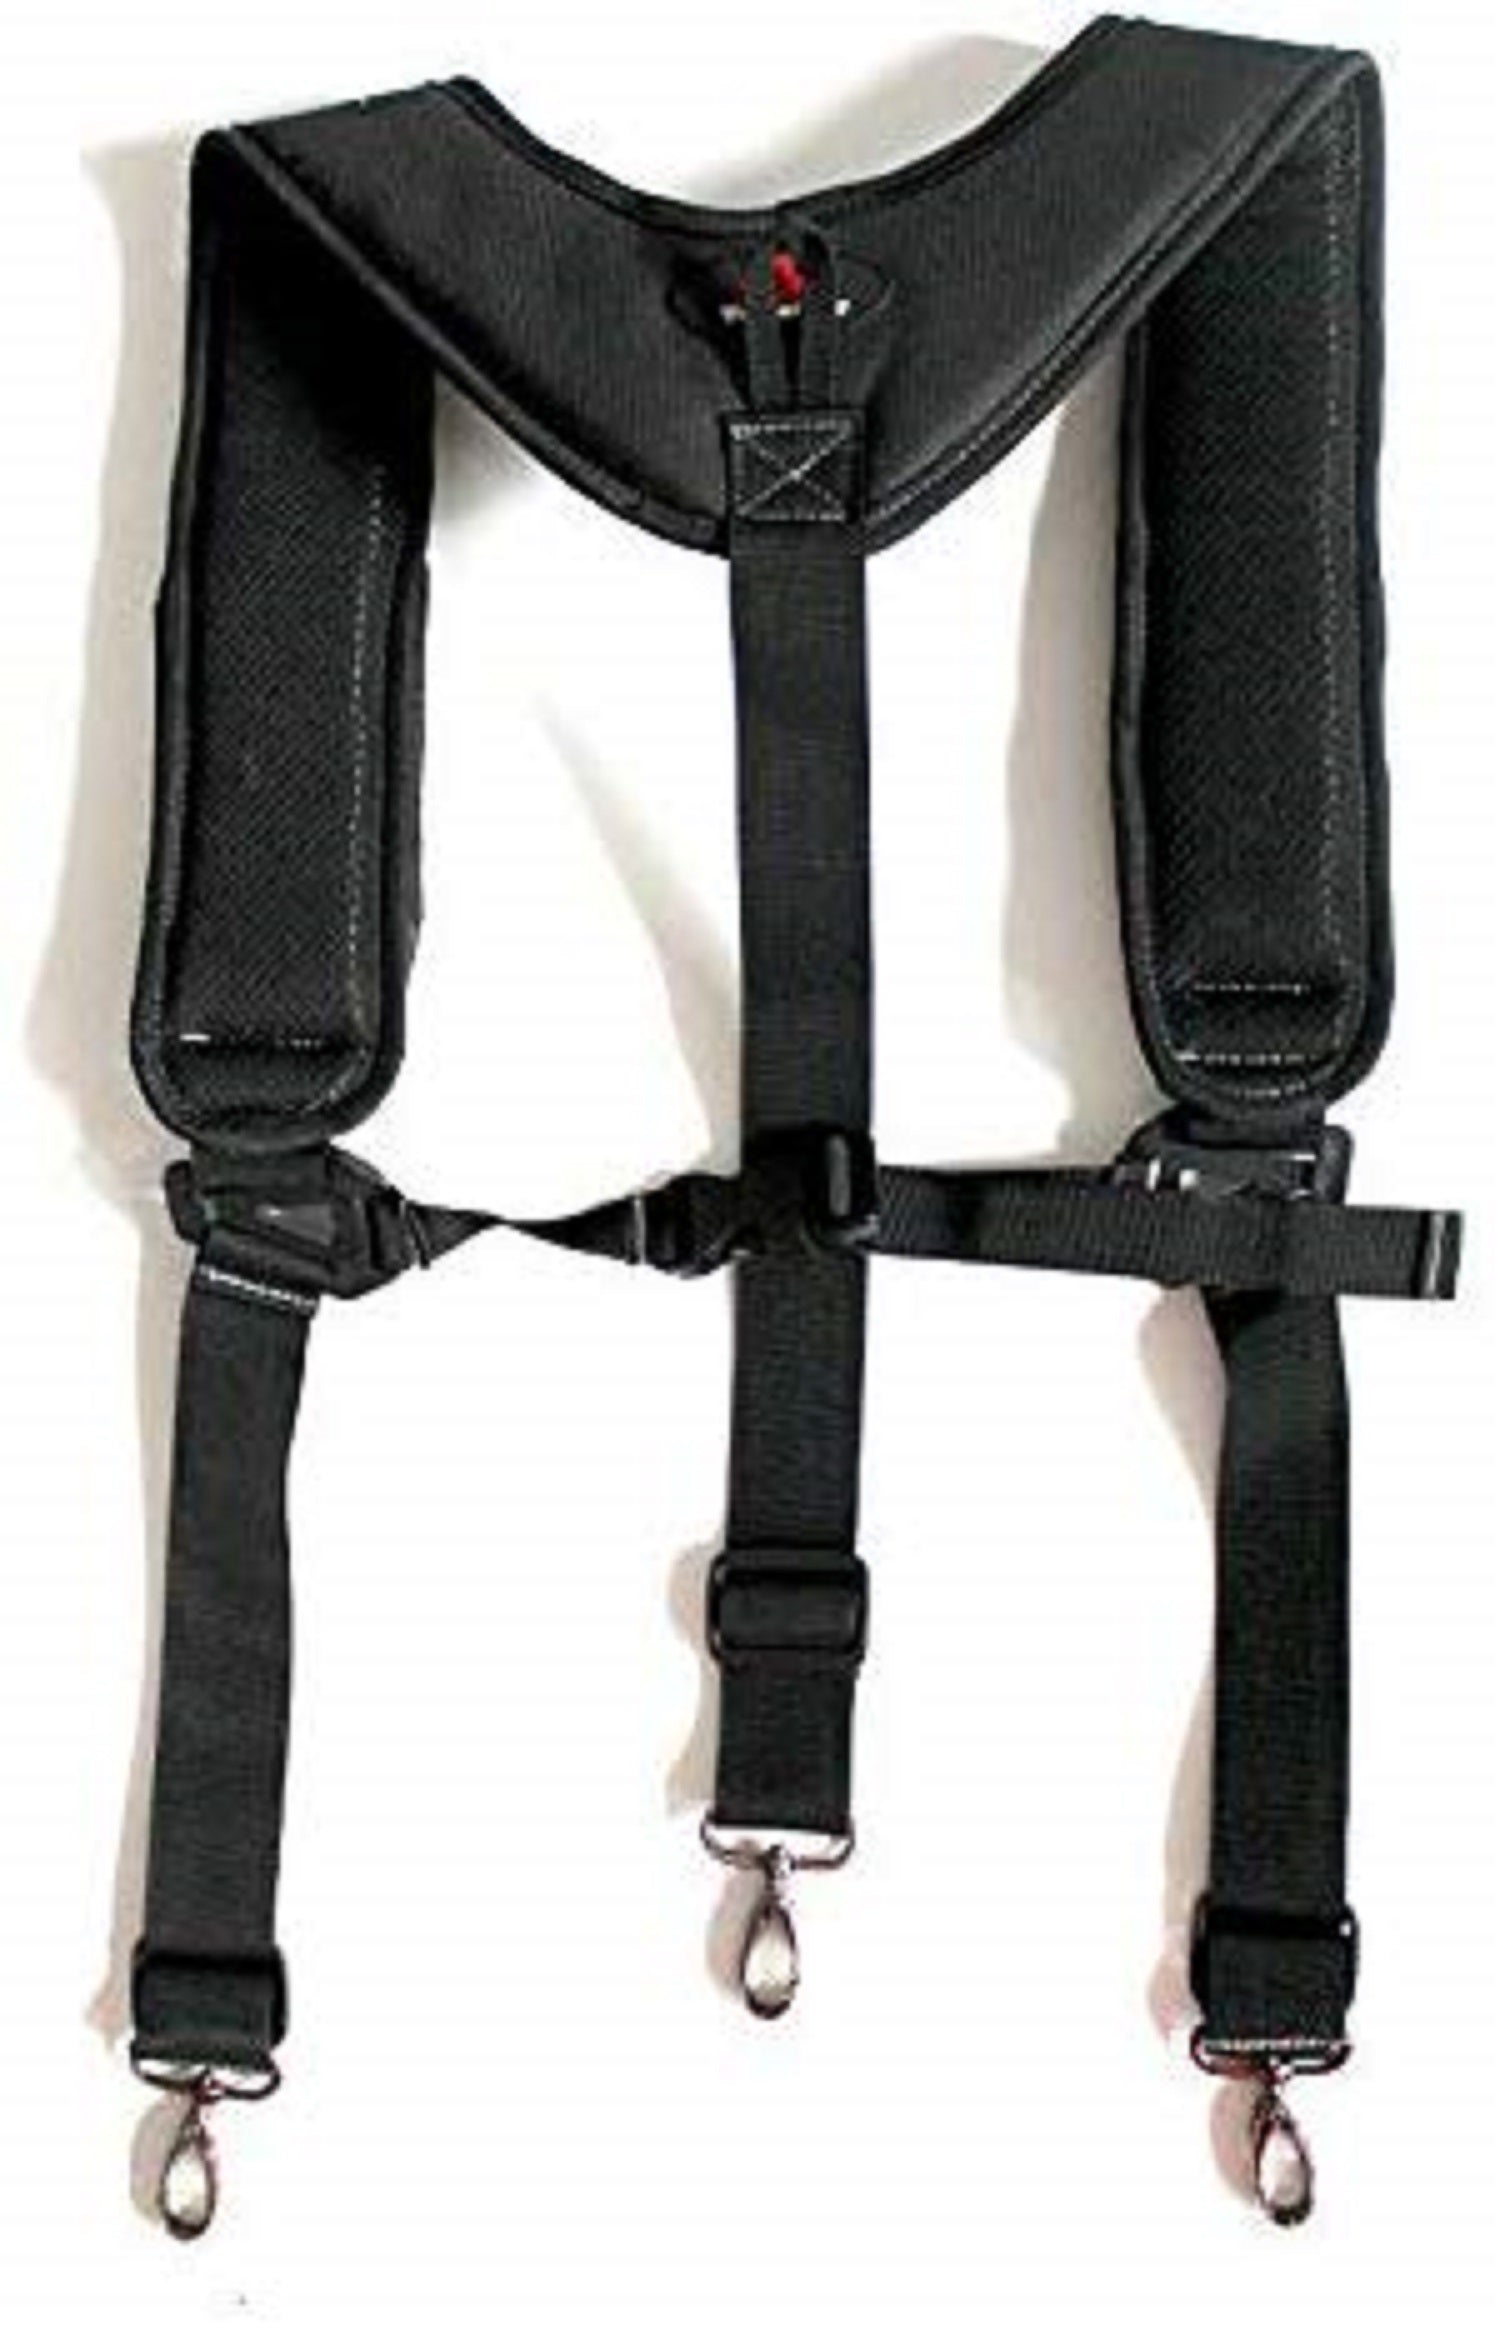 TradeGear Magnetic 3 point suspenders Designed for Maximum Comfort and Durability - TradeGear